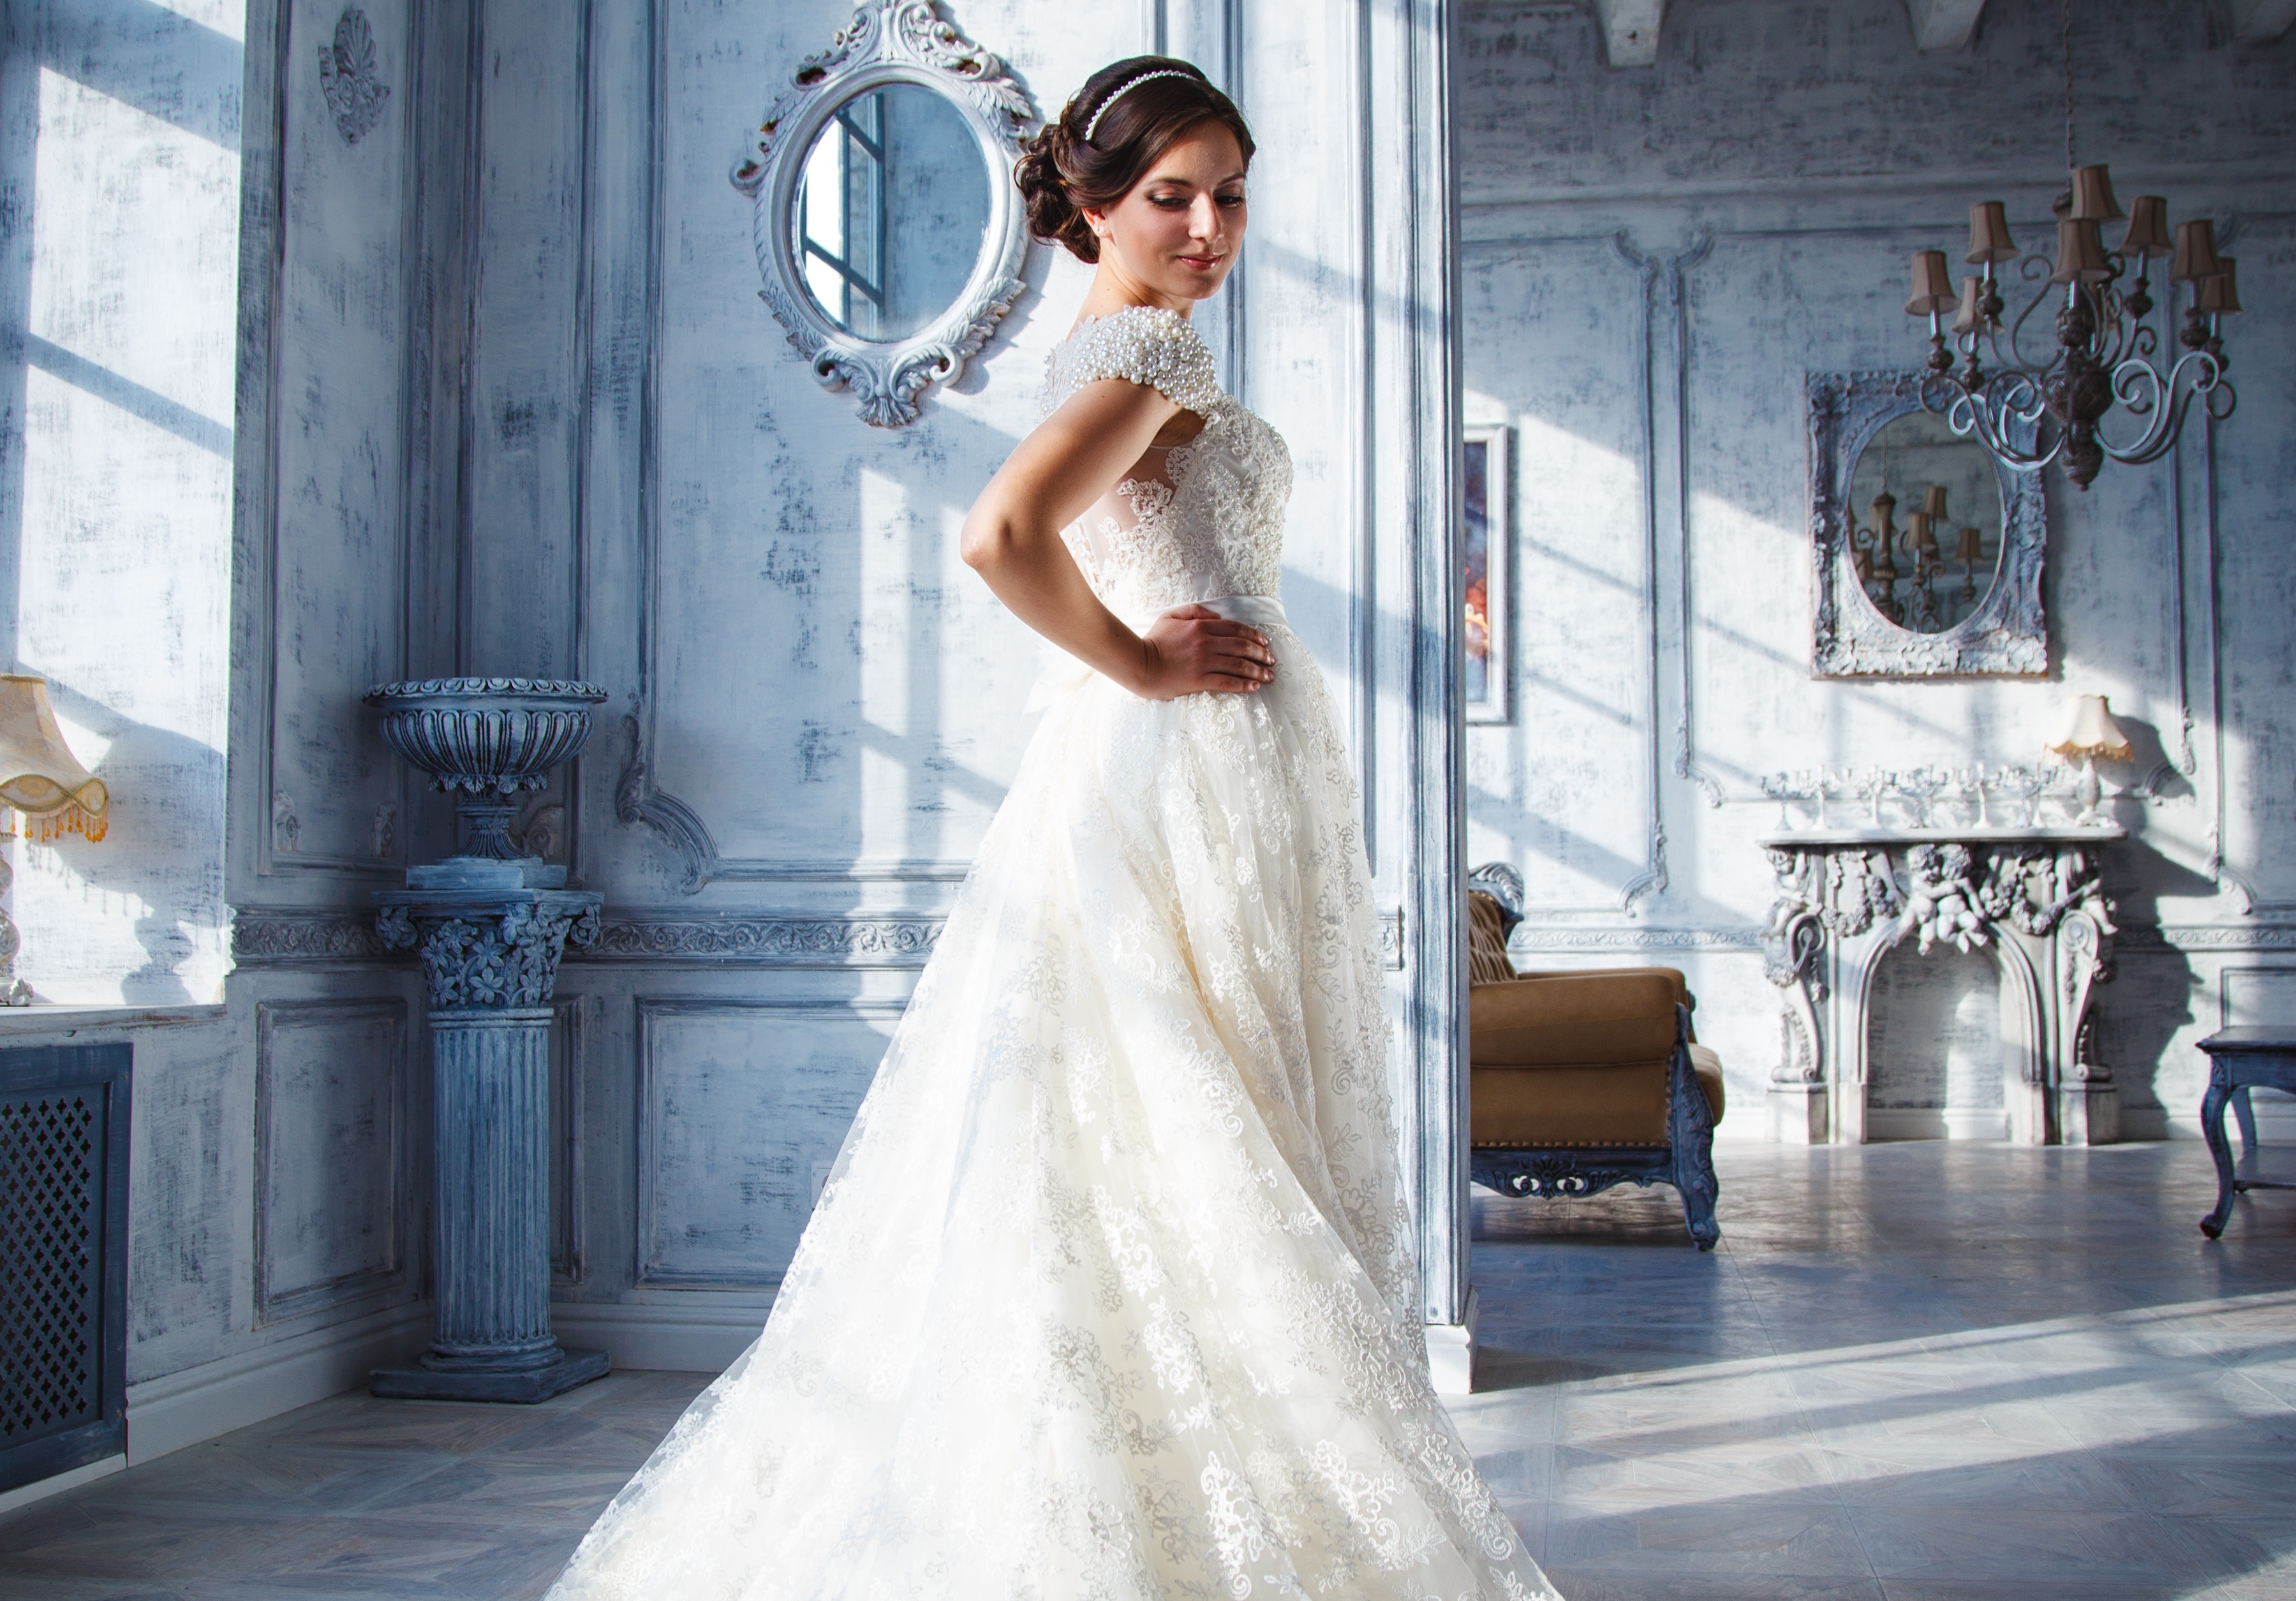 Woman Girl Wedding Dress Brunette White Dress 3599x2510